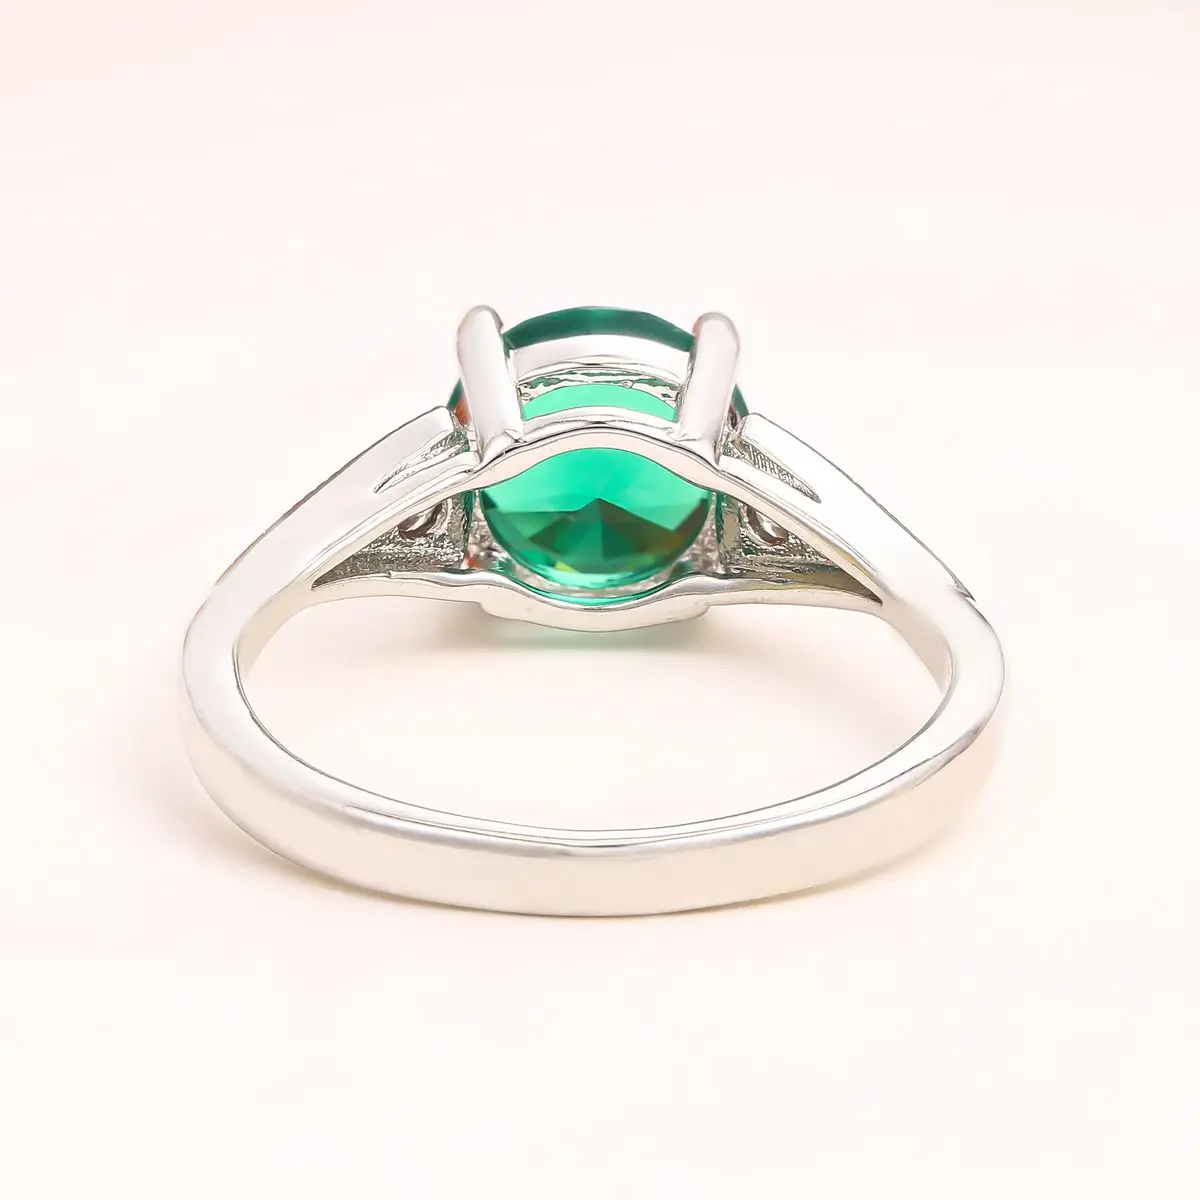 Professional jewelry factory emerald cut diamond wholesale 18 carat classic gorgeous white gold diamond ring